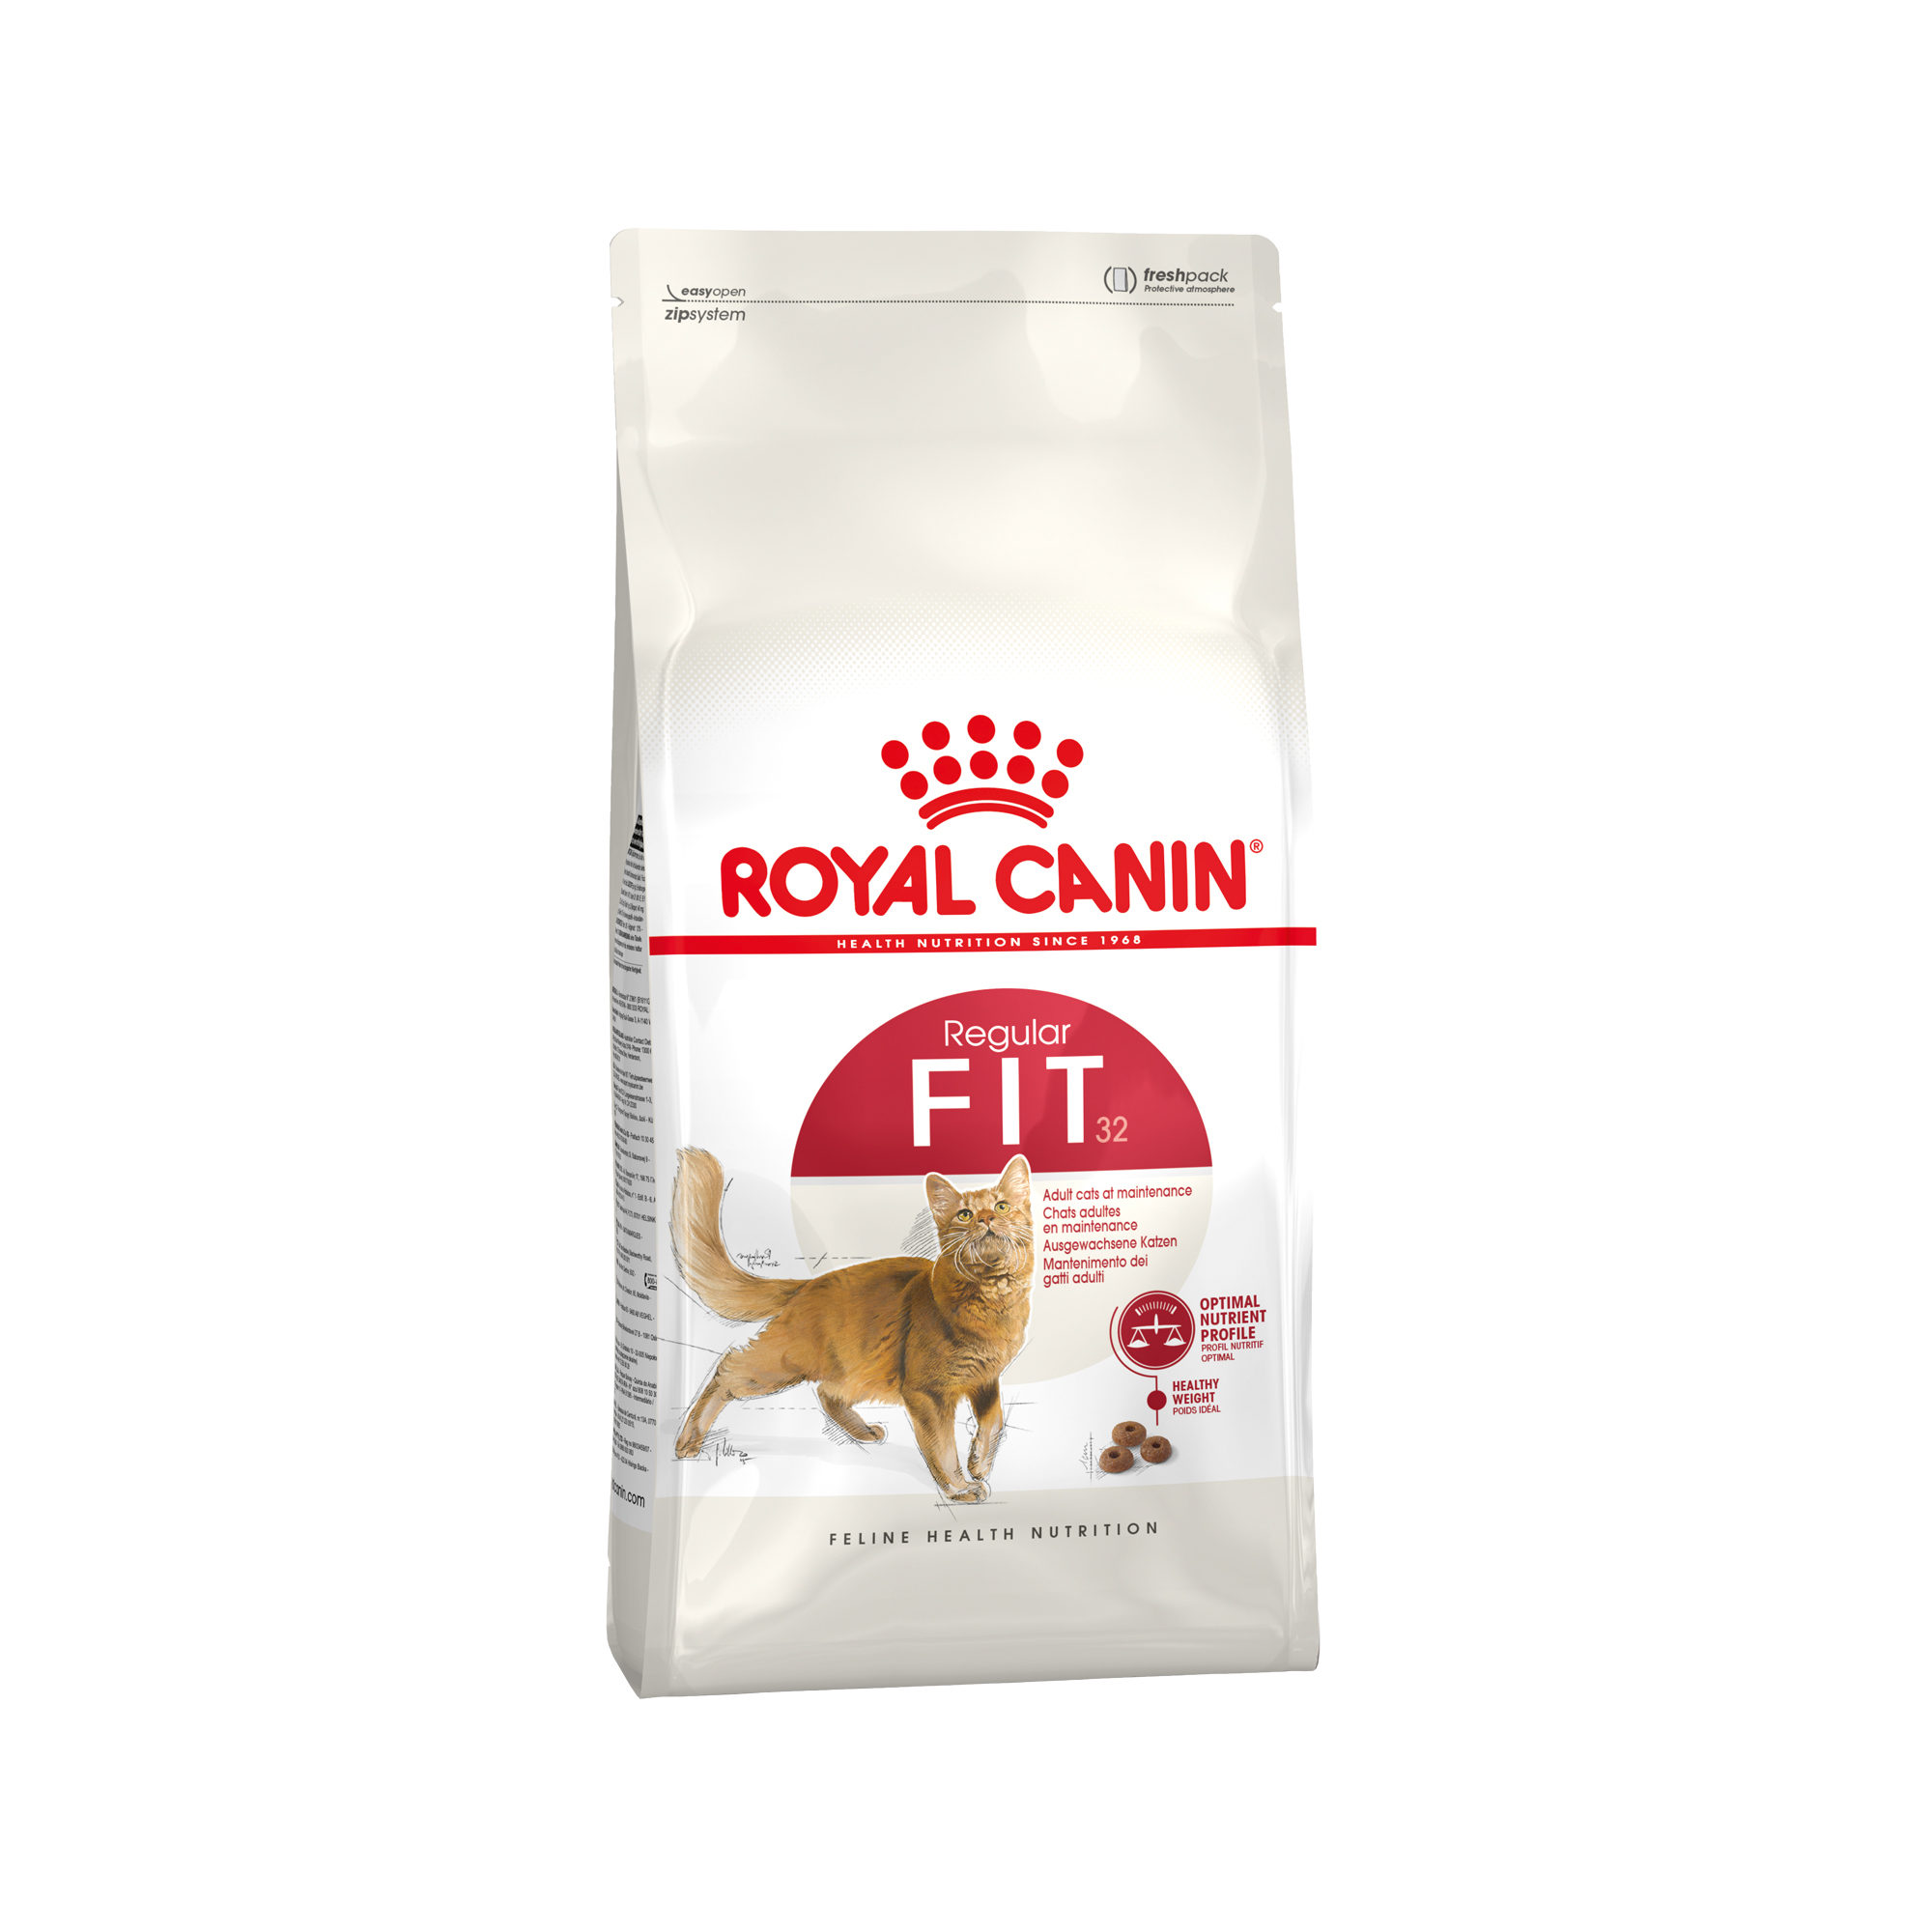 Royal Canin Fit 32 Katzenfutter - 4 kg